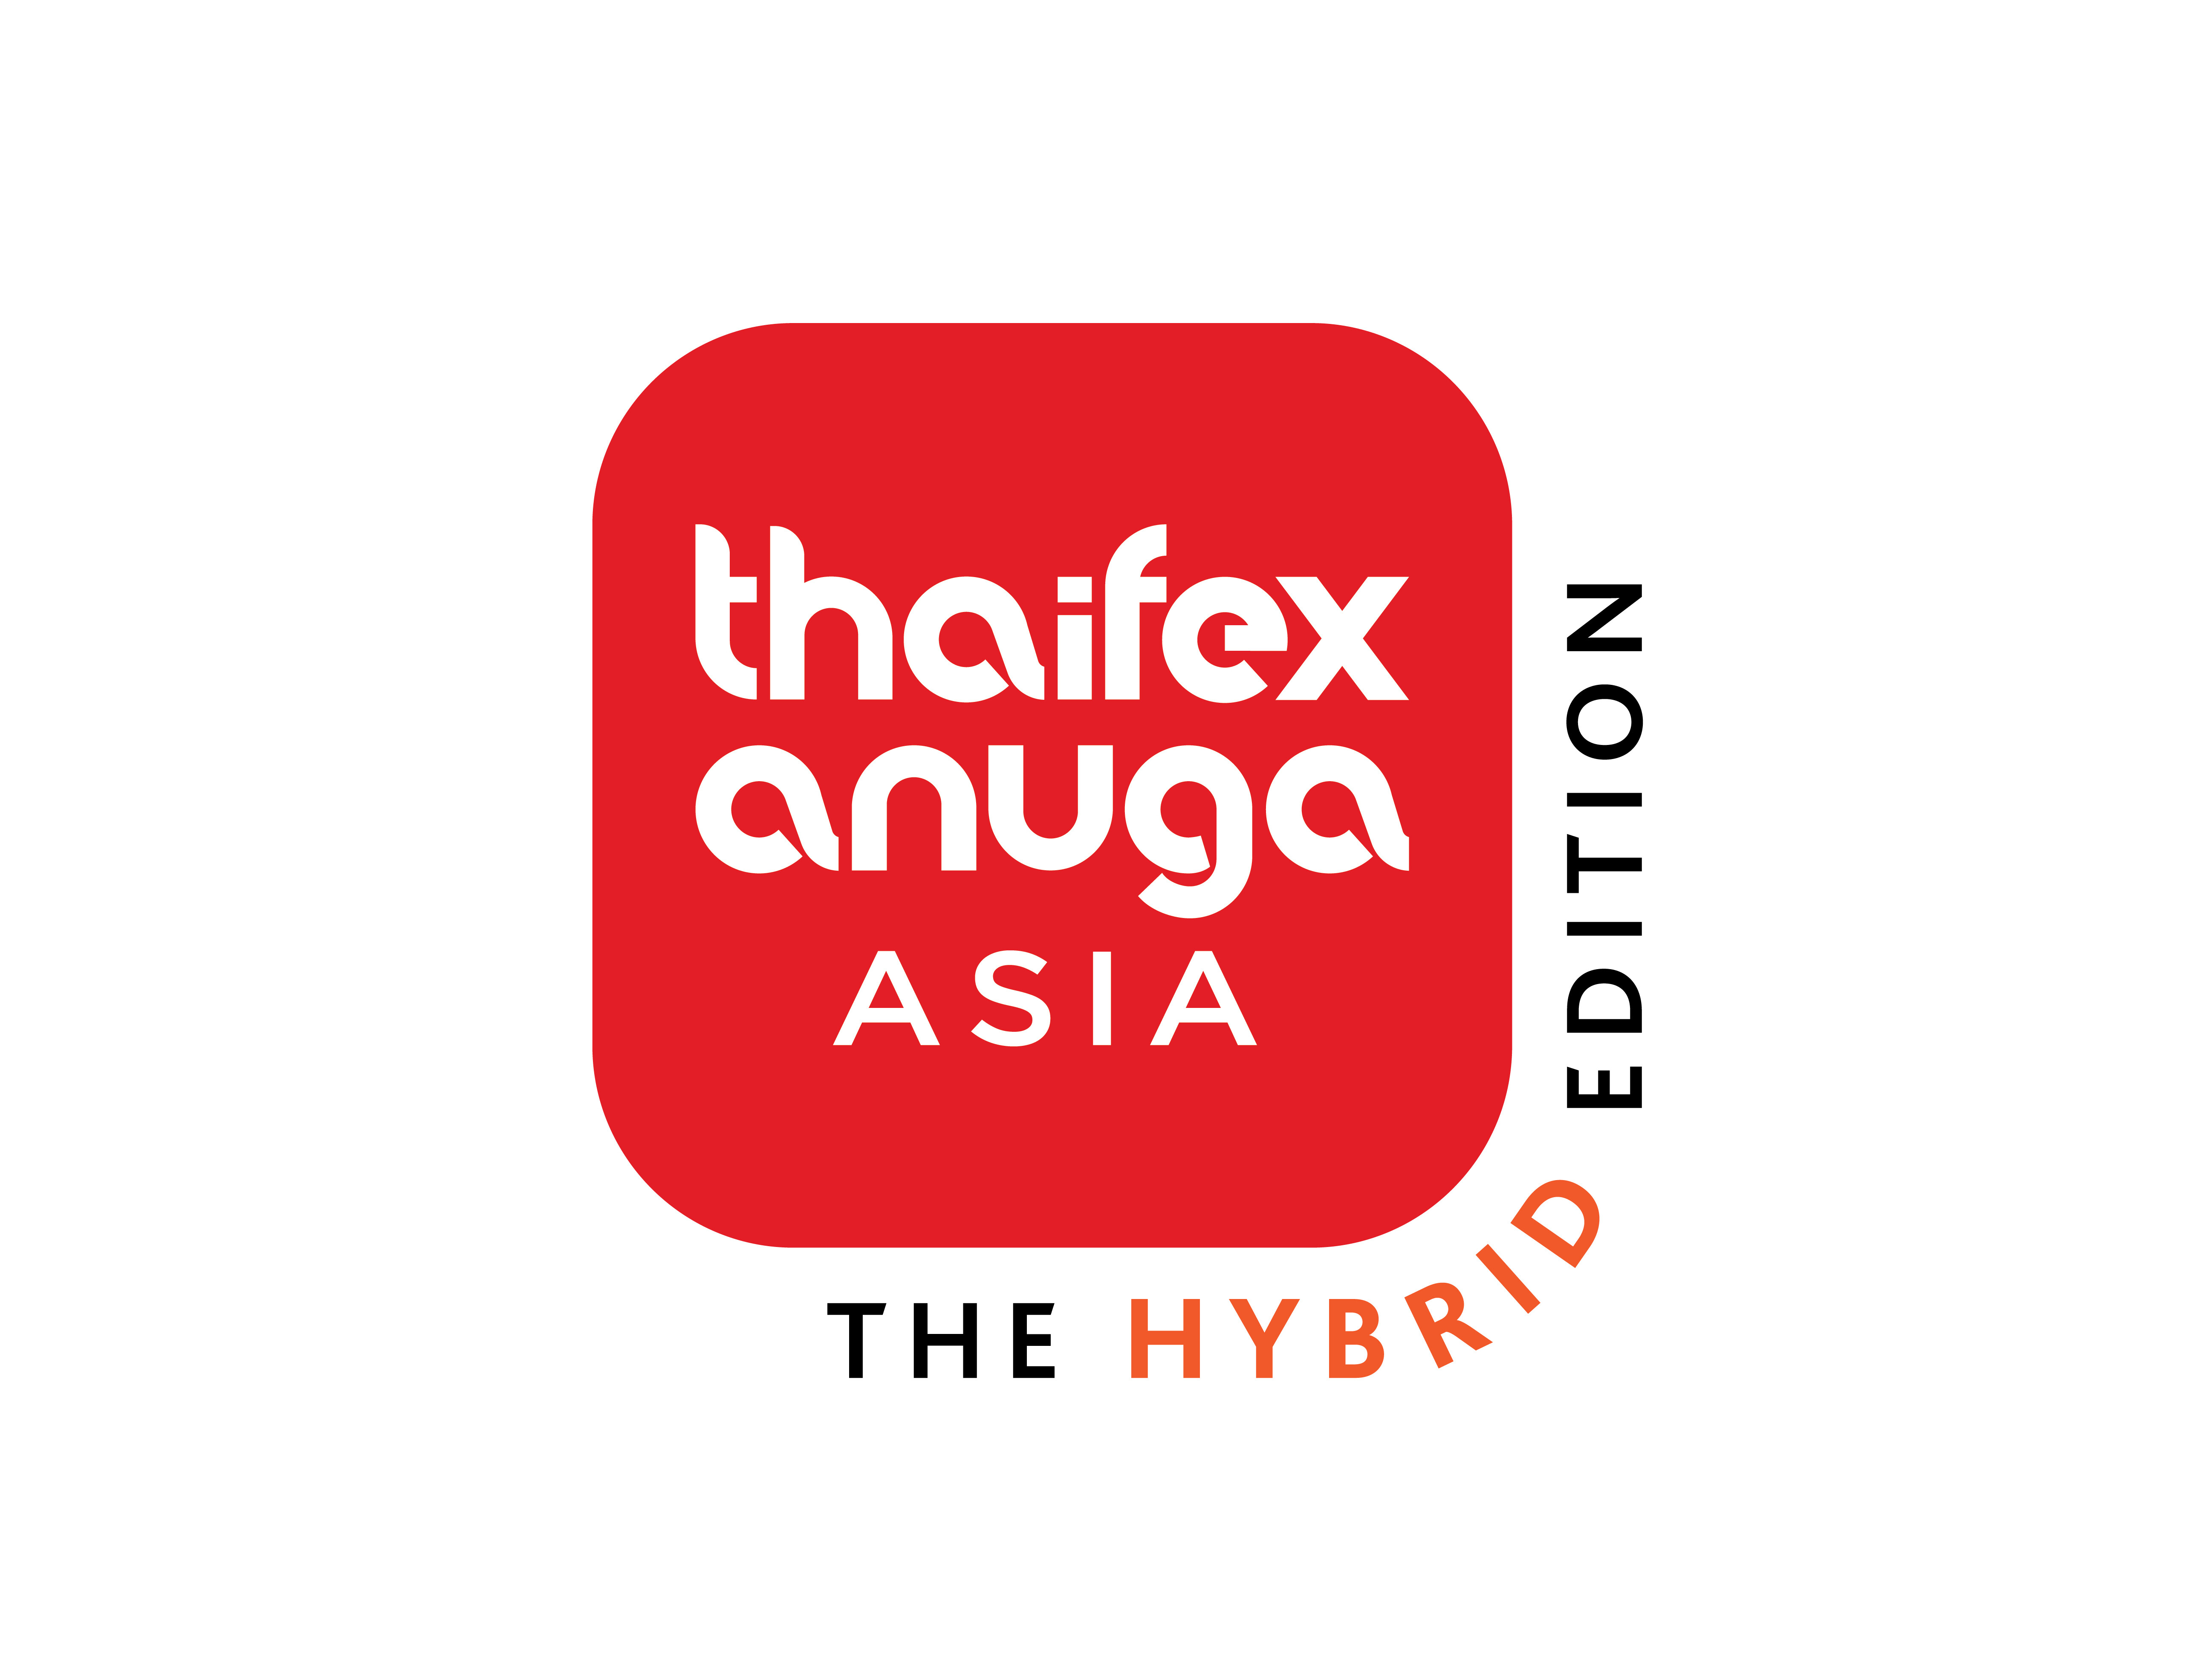 DITP จัดแสดง 11 เทรดโชว์ ในงาน THAIFEX-ANUGA ASIA 2020 “The Hybrid Edition” เปิดโอกาสทางธุรกิจให้ผู้ประกอบการอาหารและเครื่องดื่มทุกประเภท